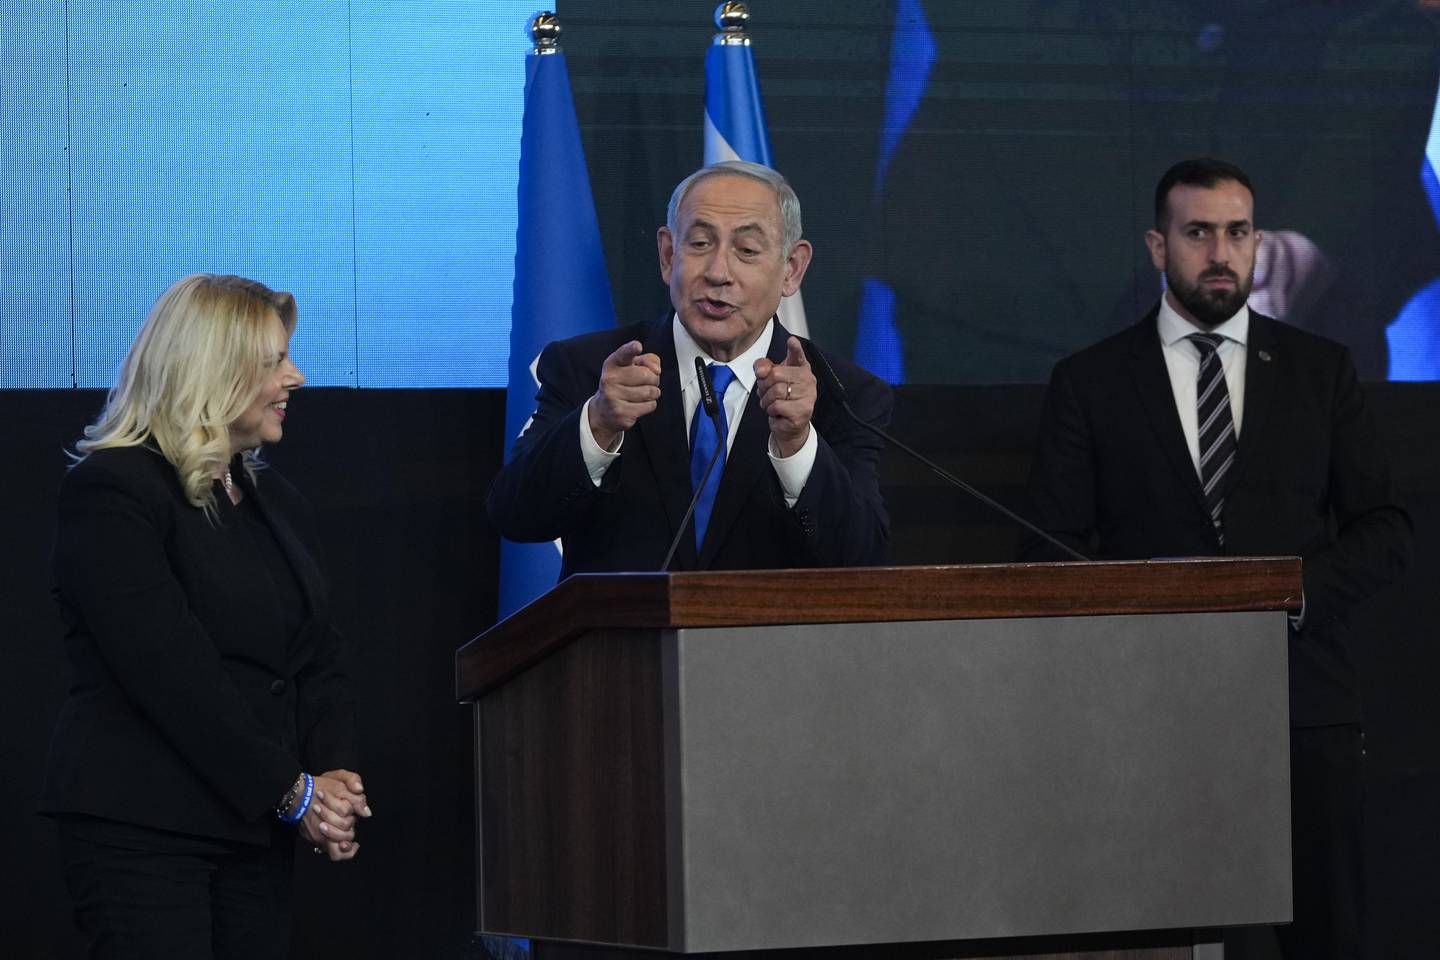 SEIRET: Israels tidligere statsminister, Benjamin Netanyahu går mot en ny runde med makten i Israel. Han må i så fall samarbeide med flere små partier.